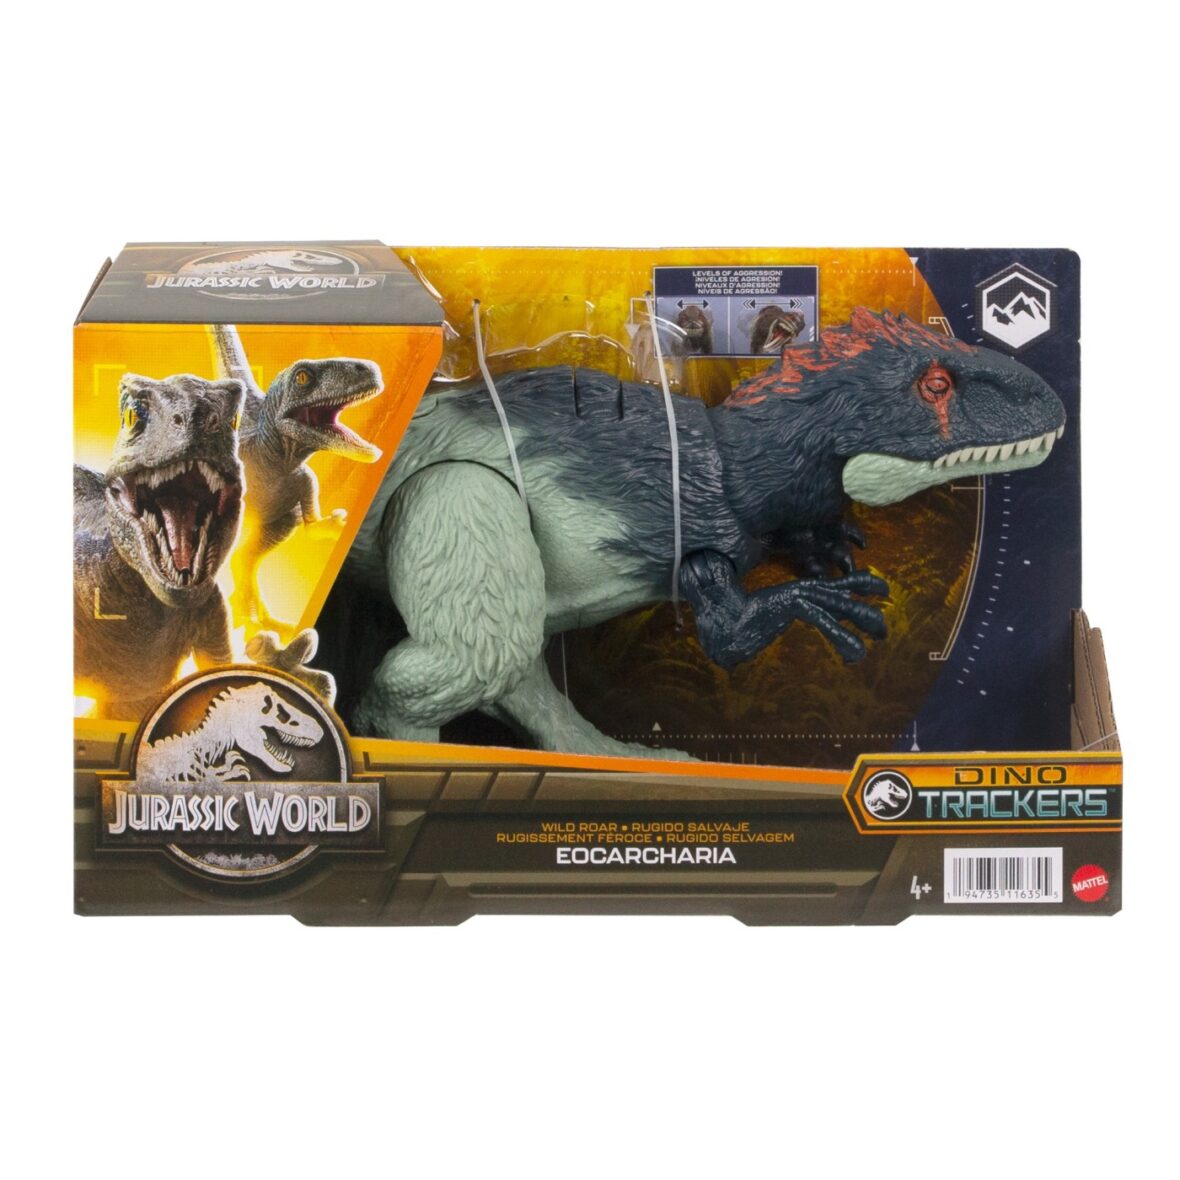 Jurassic World Dino Trackers Wild Roar Dinozaur Eocarcharia